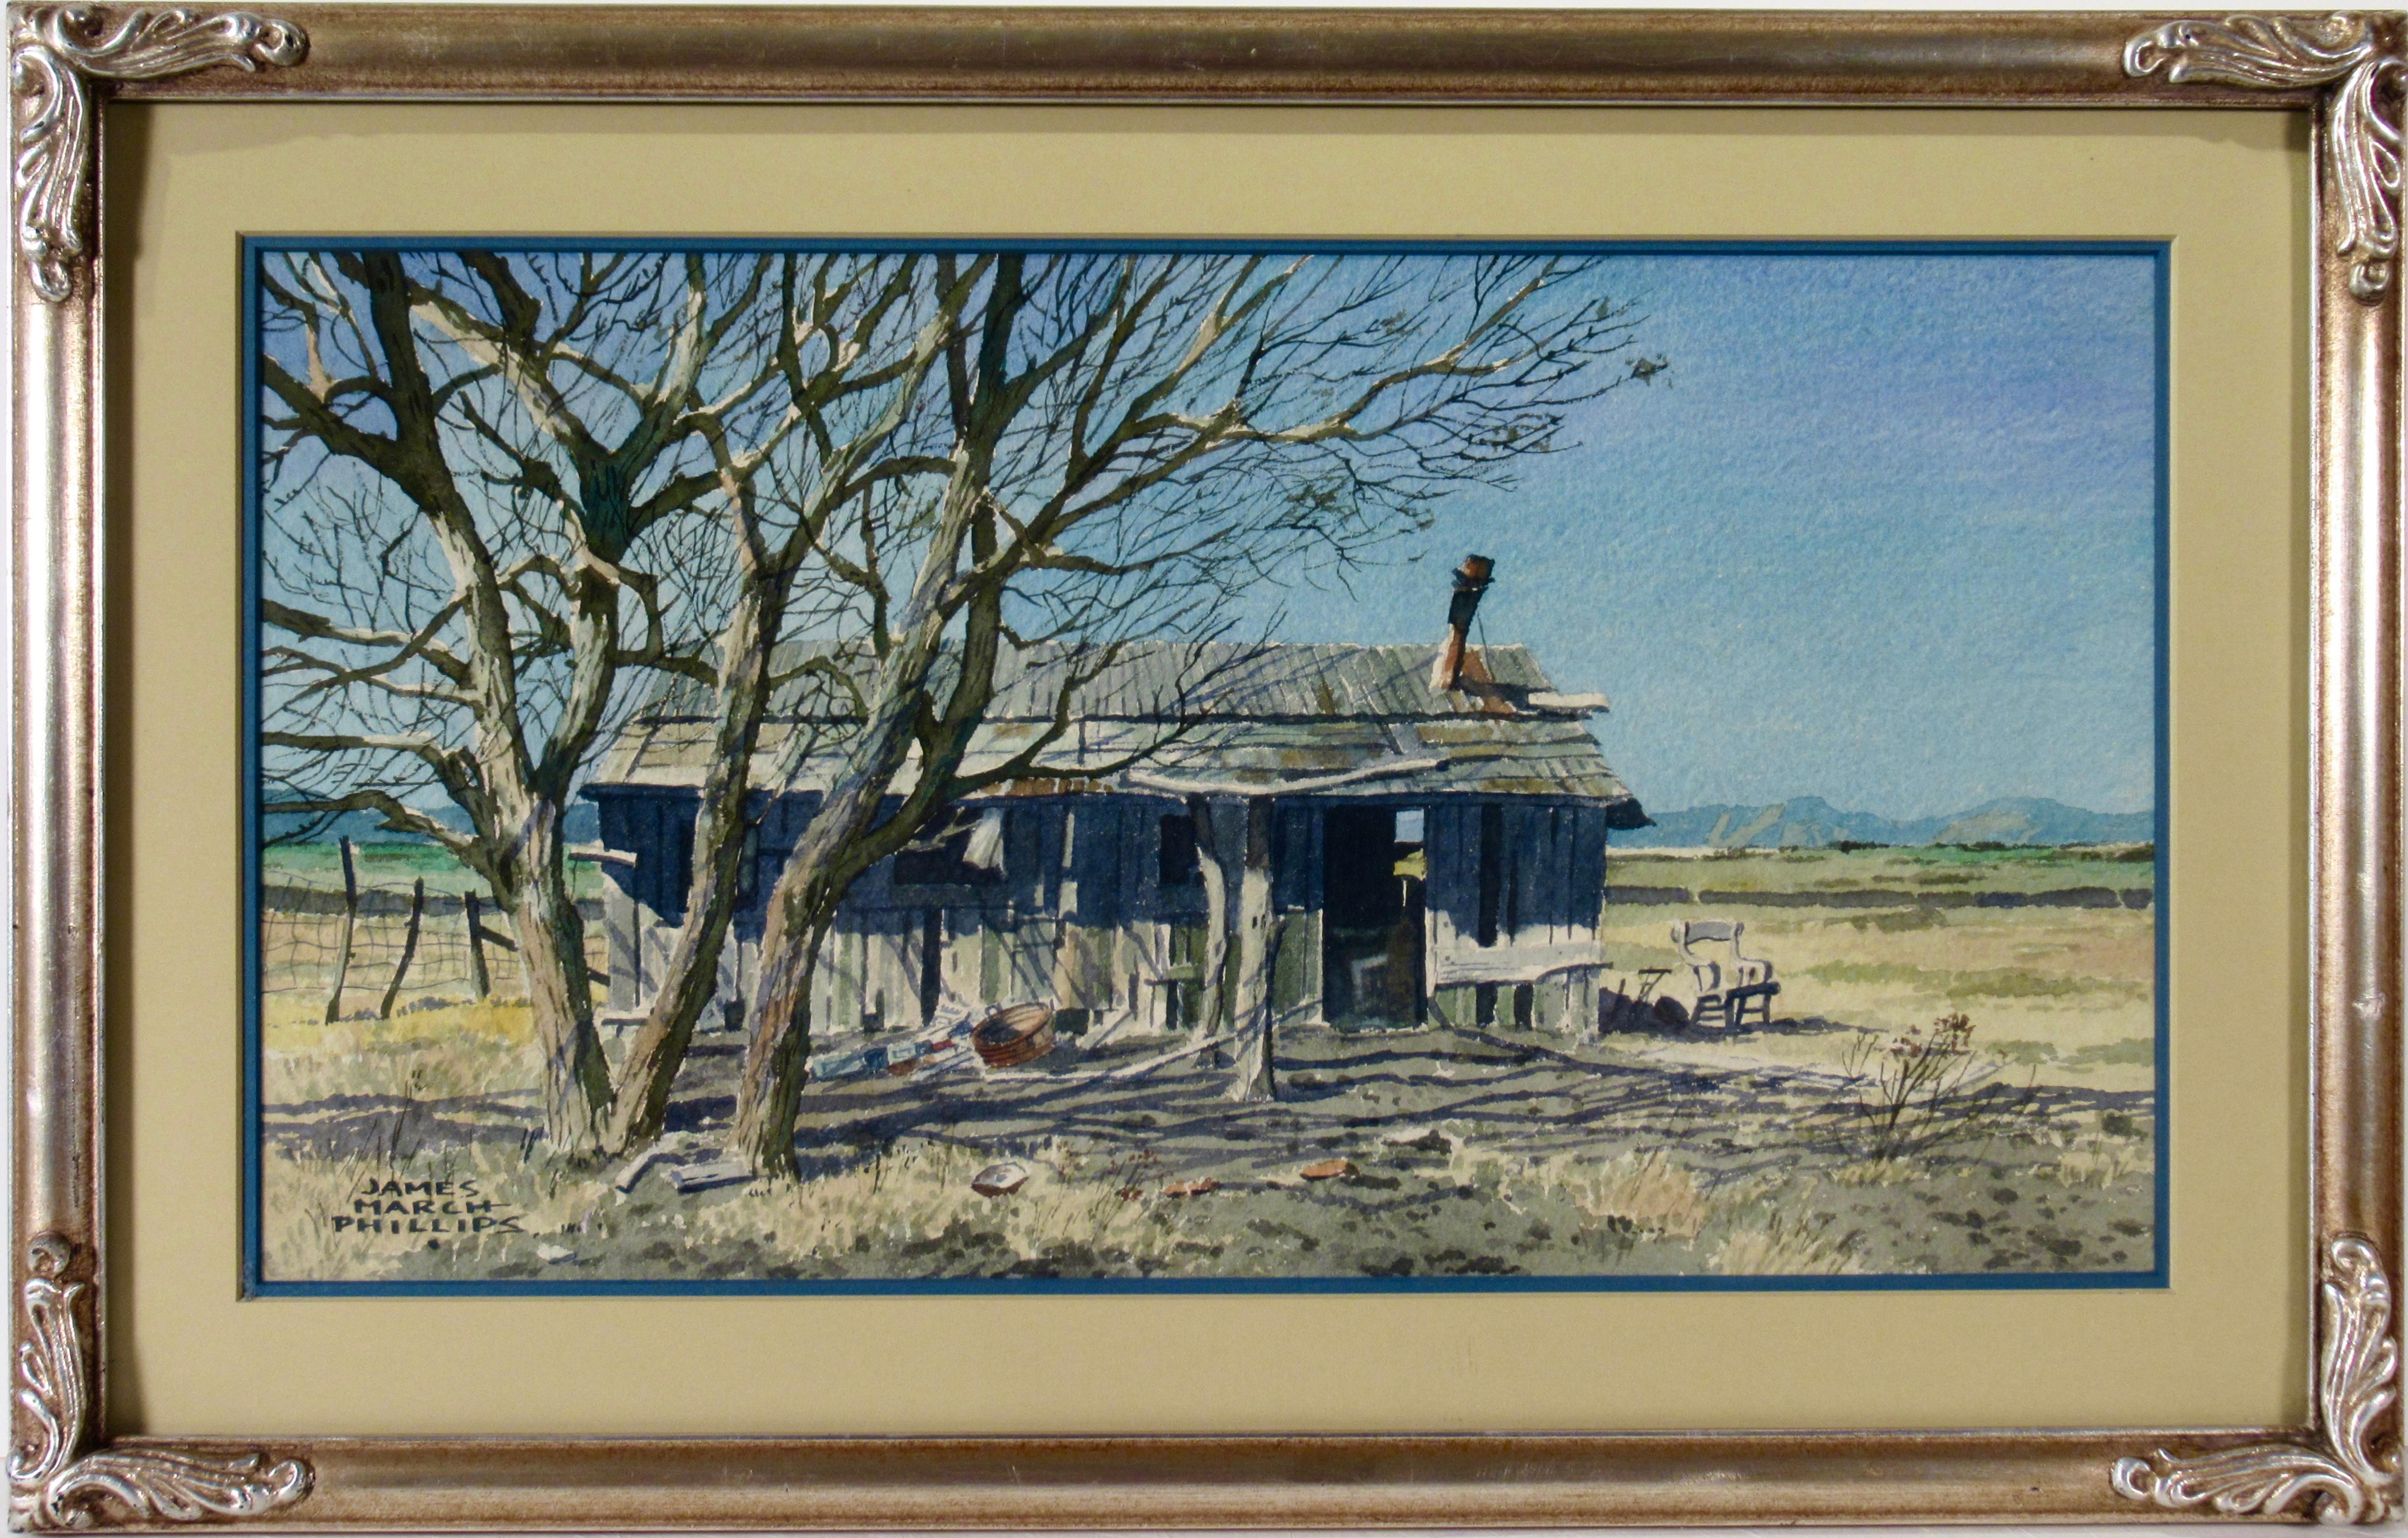 James March Phillips Landscape Art - Forgotten Ranch House, Arizona